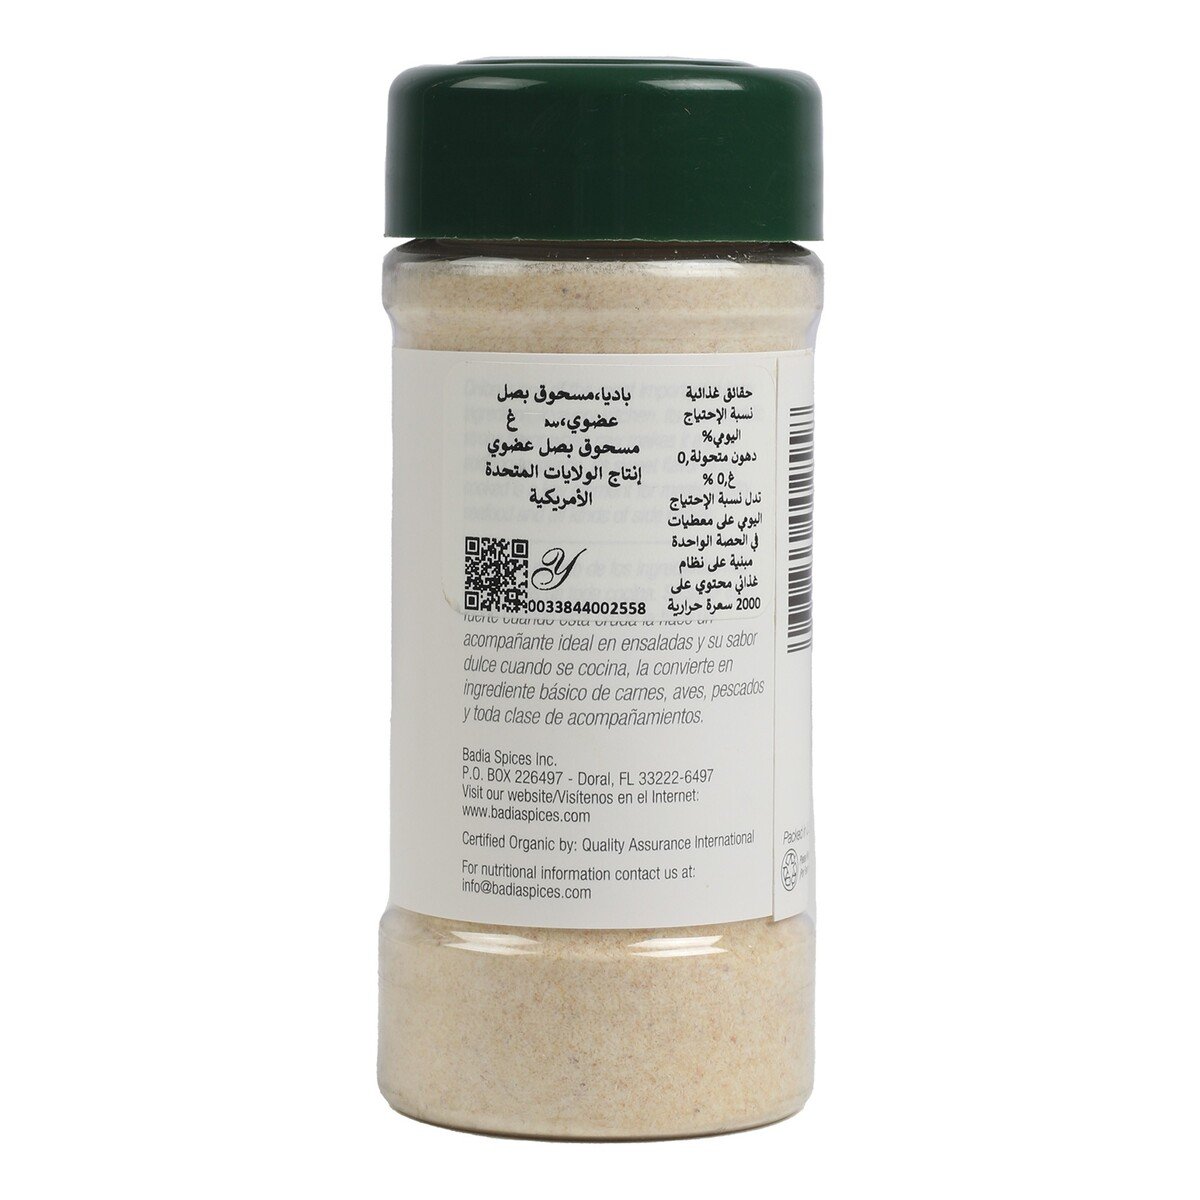 Badia Gluten Free Onion Powder 2.75 oz